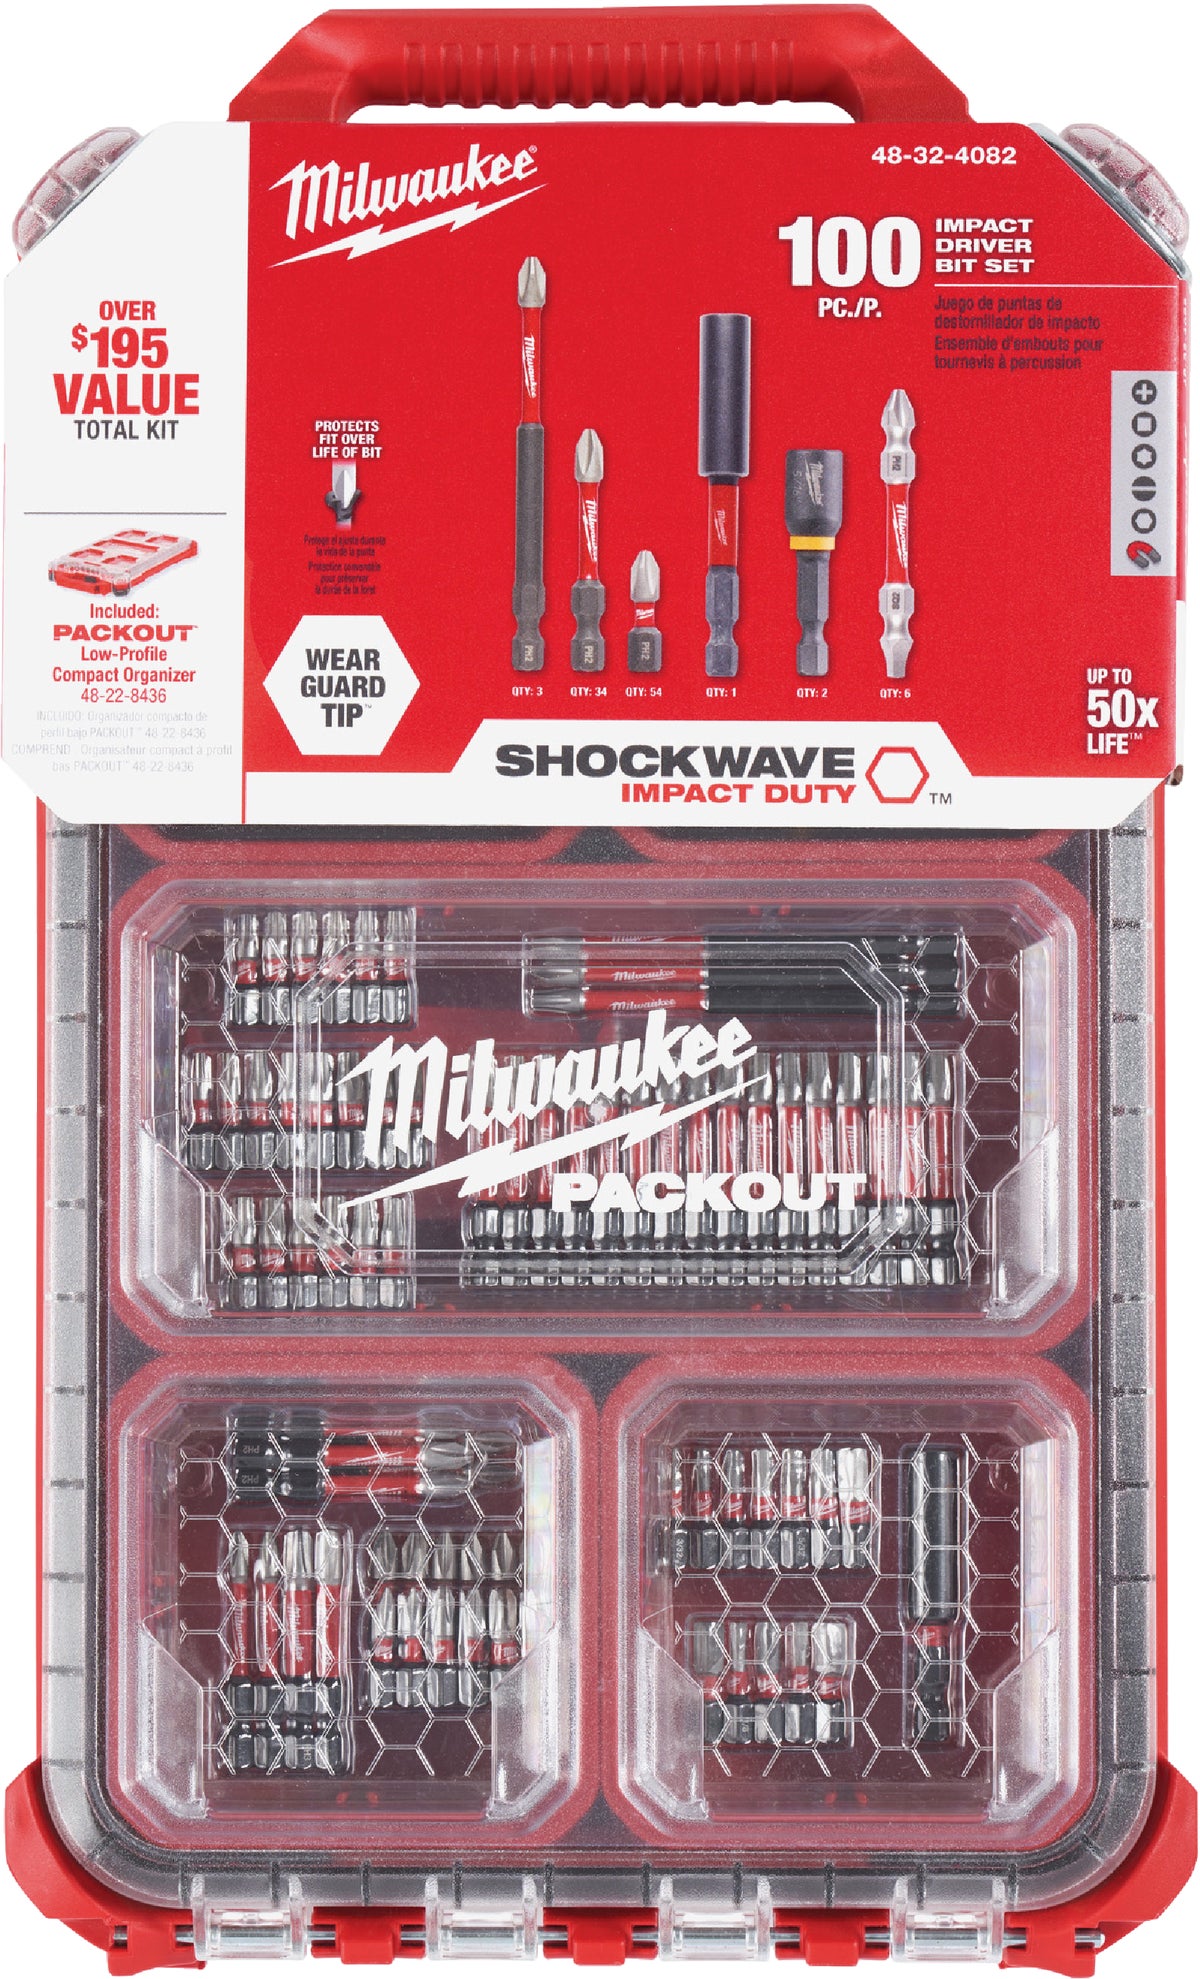 Details about   Milwaukee 4932471586 32 Piece Shockwave Impact Screwdriver Bit Set 